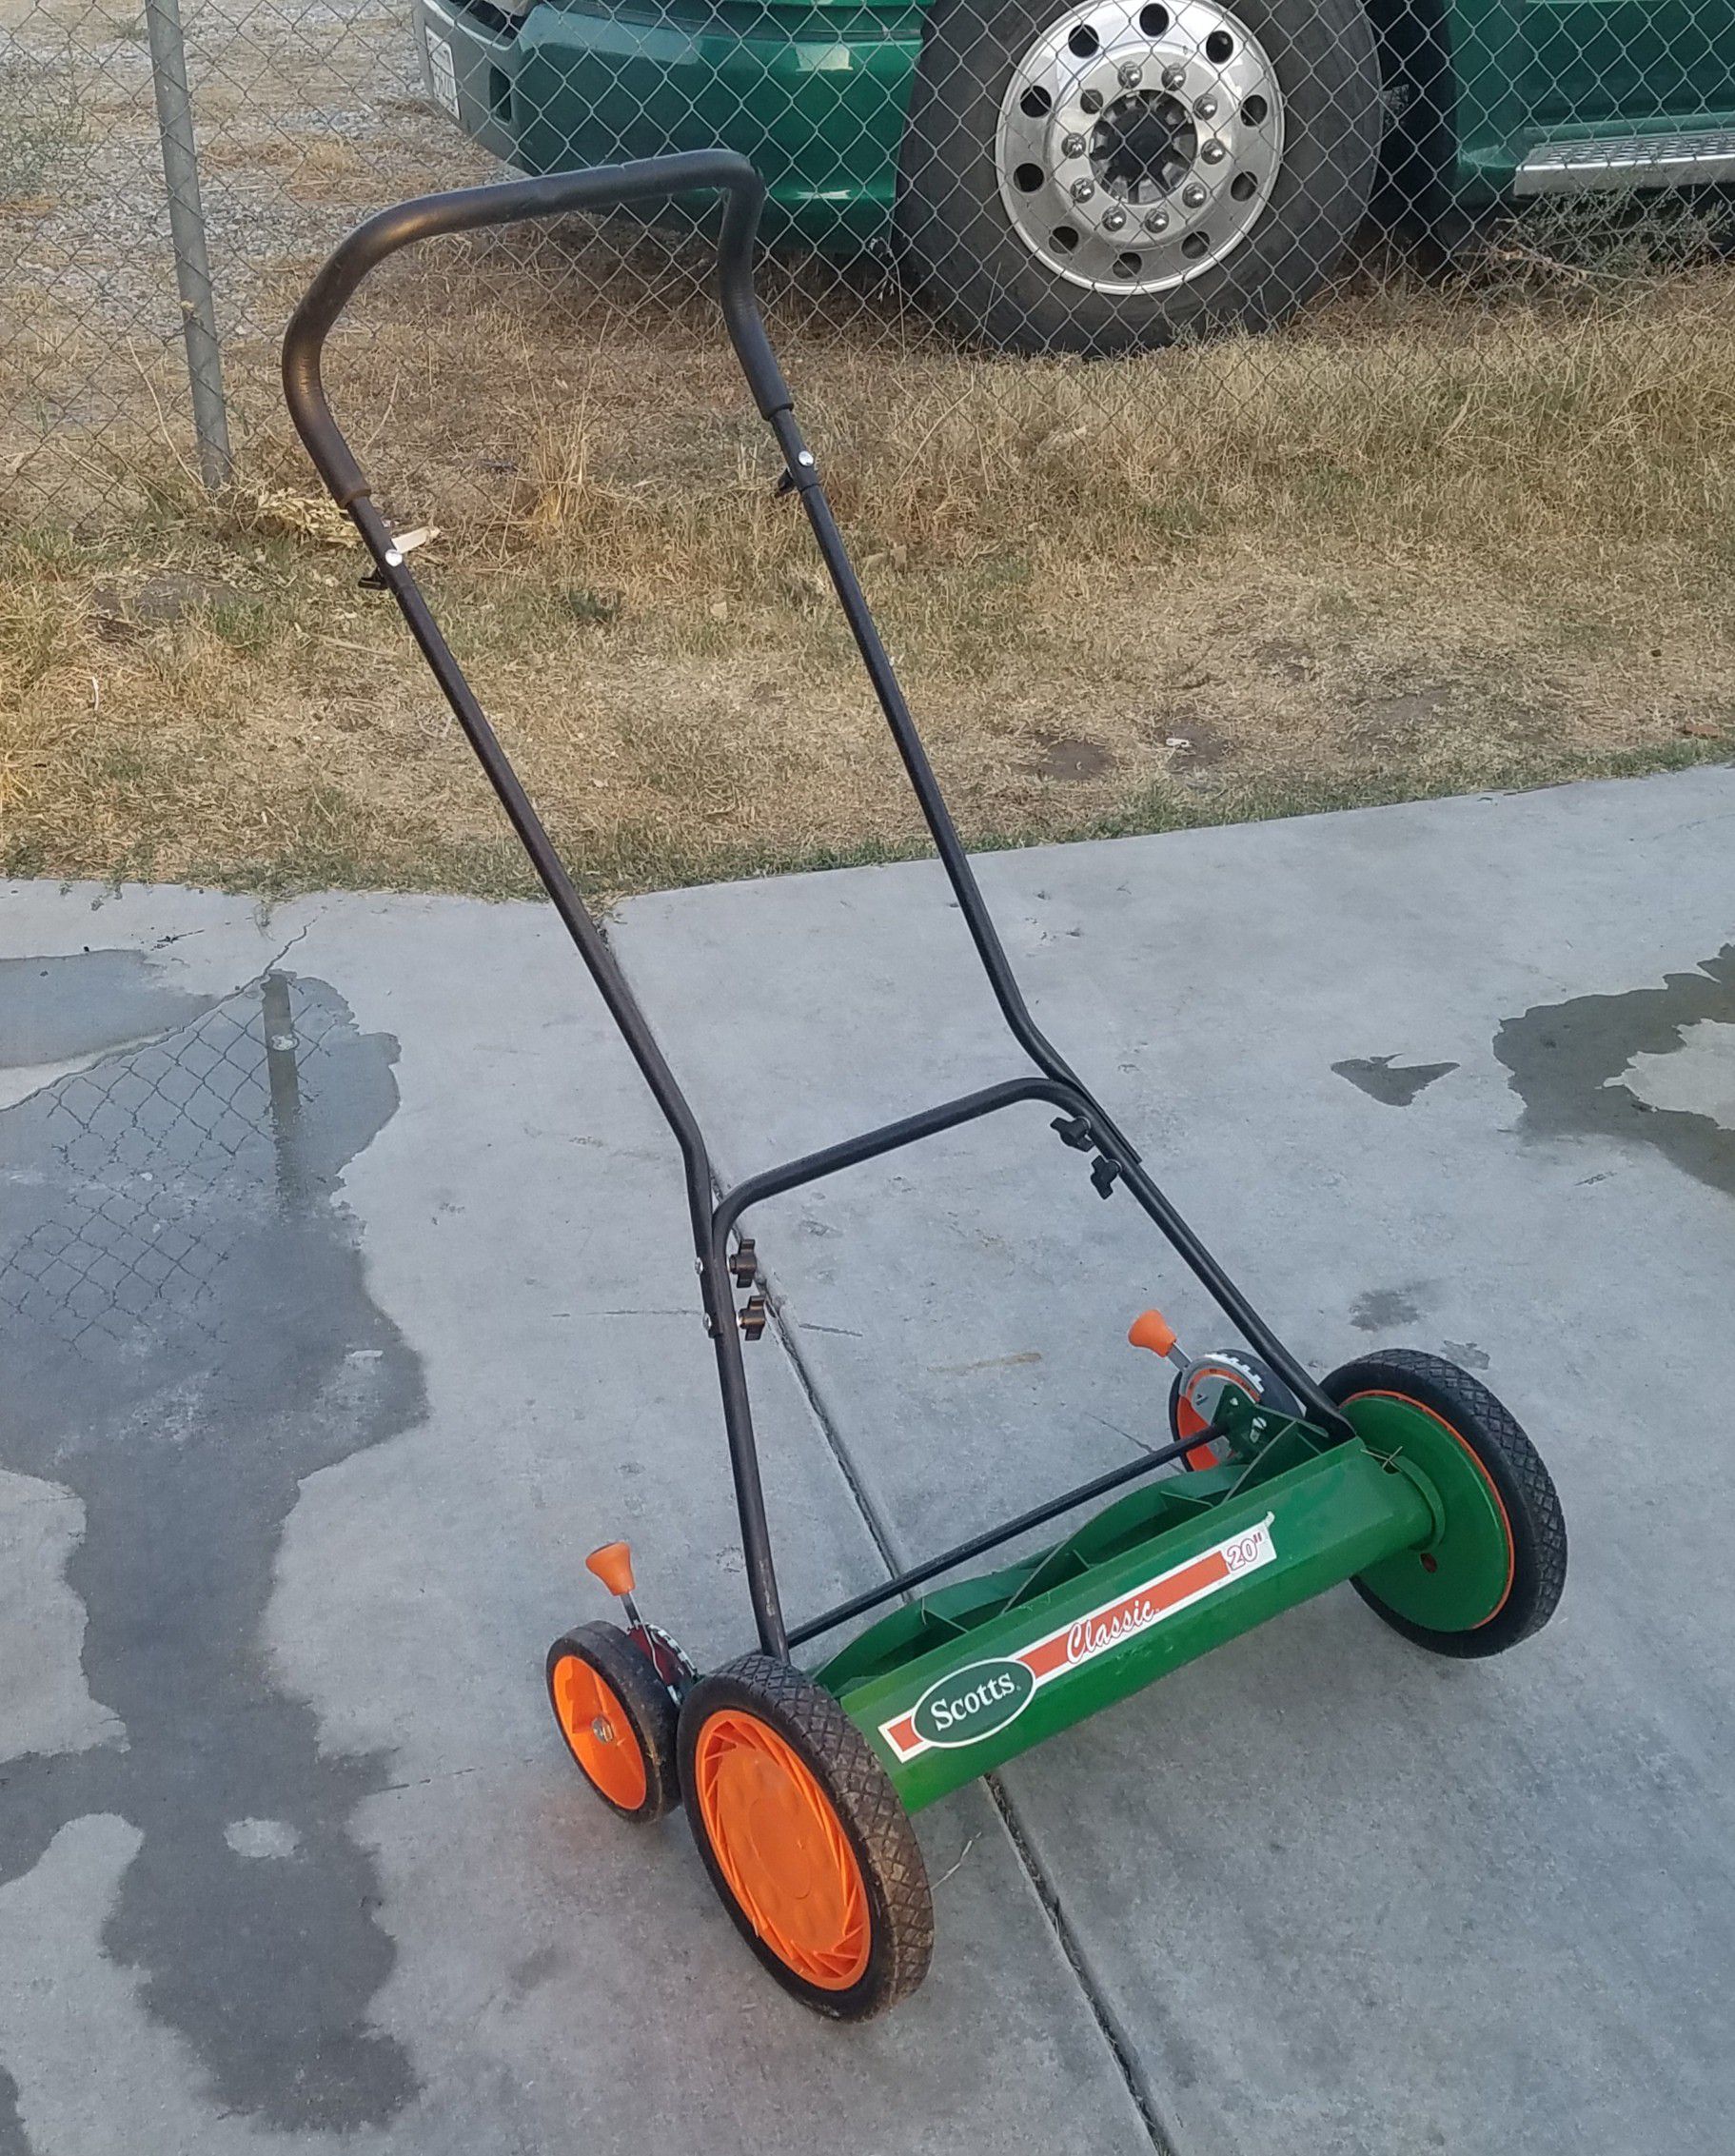 Push lawnmower $20